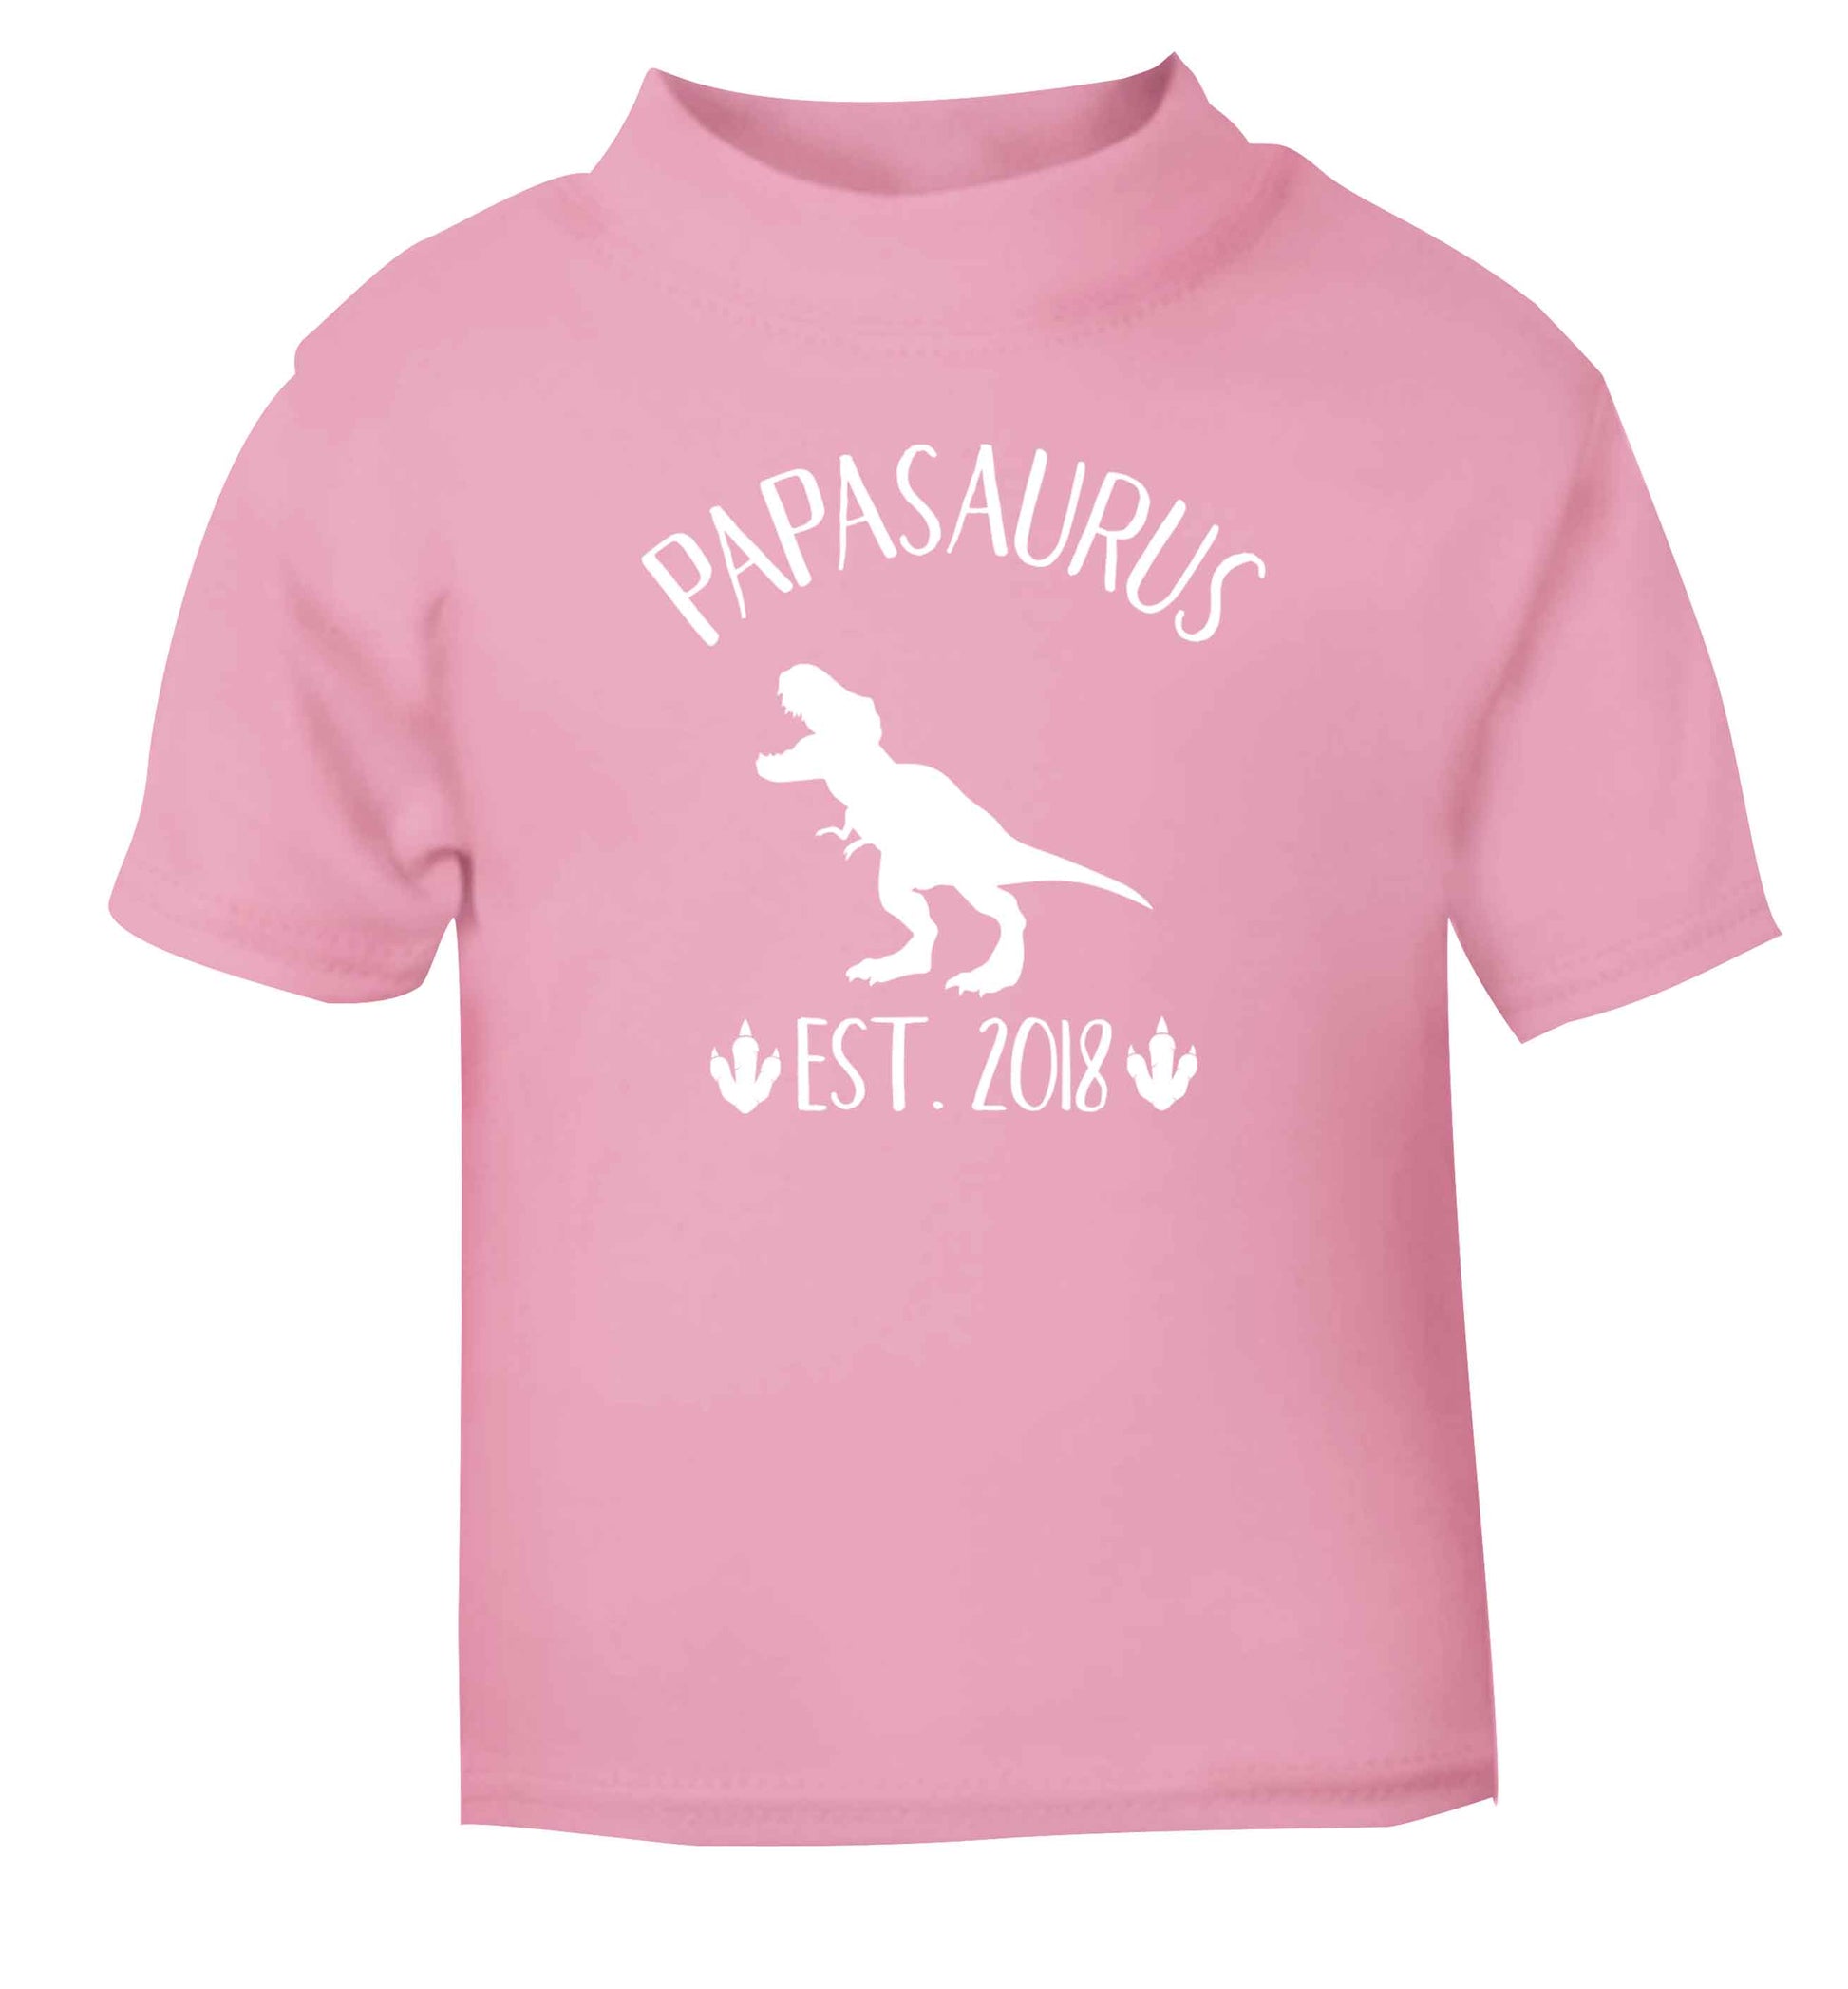 Personalised papasaurus since (custom date) light pink Baby Toddler Tshirt 2 Years